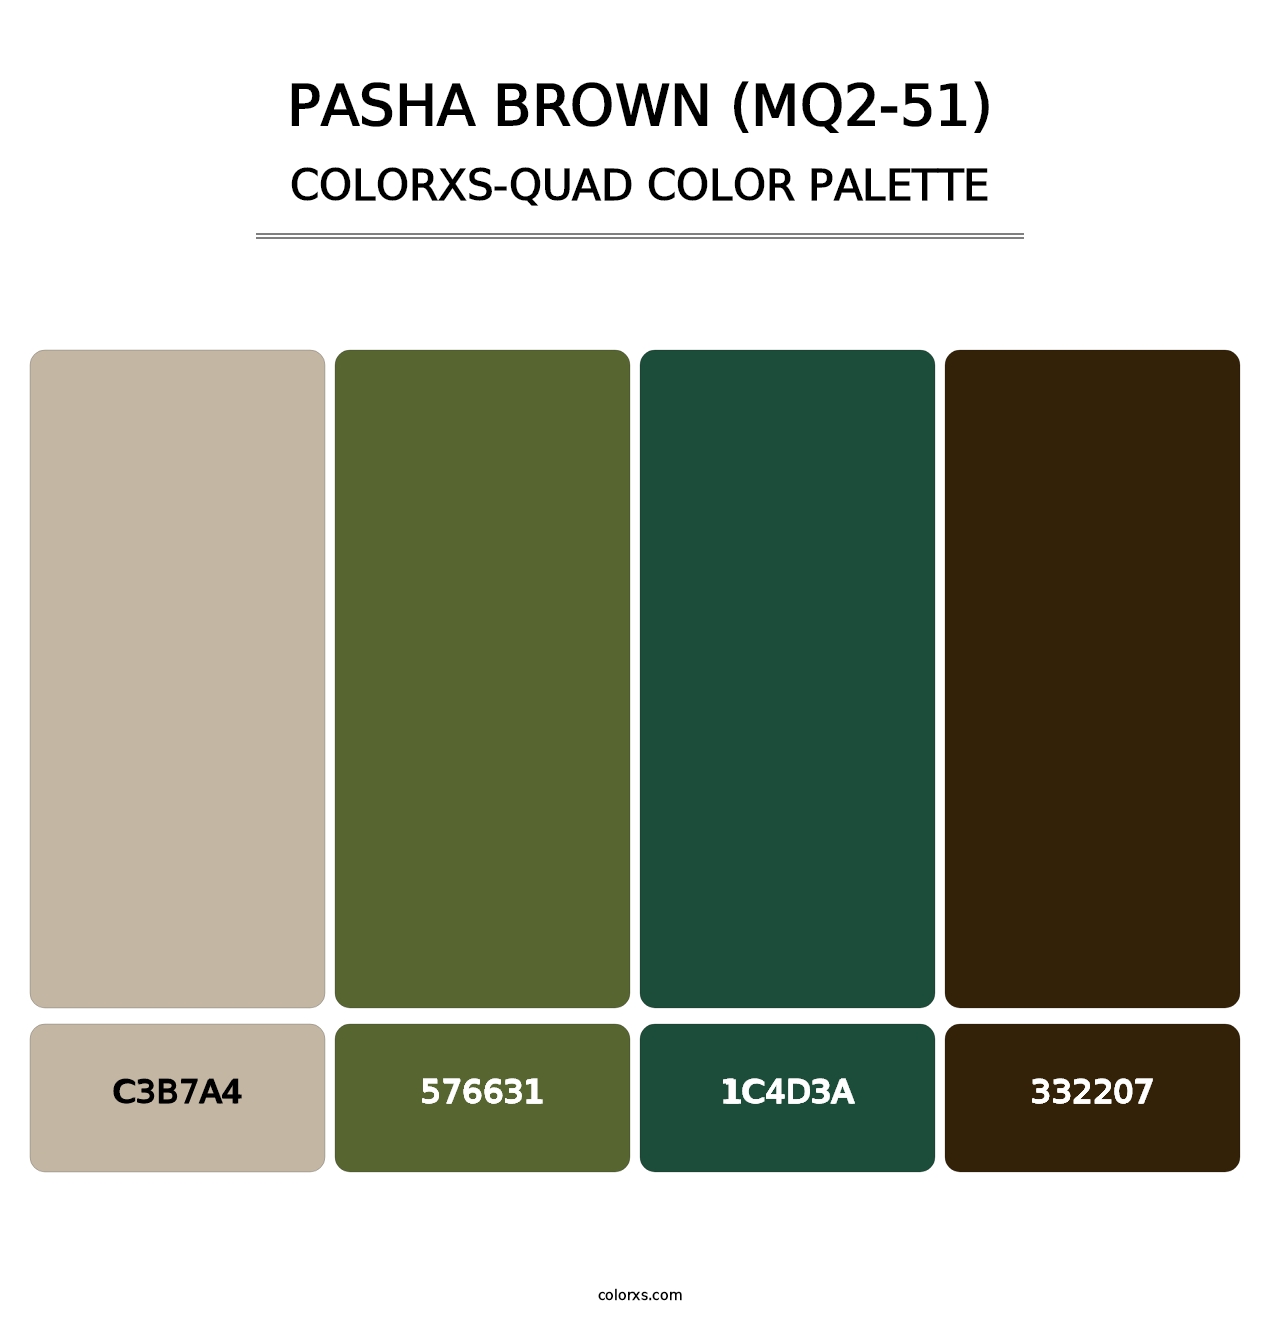 Pasha Brown (MQ2-51) - Colorxs Quad Palette